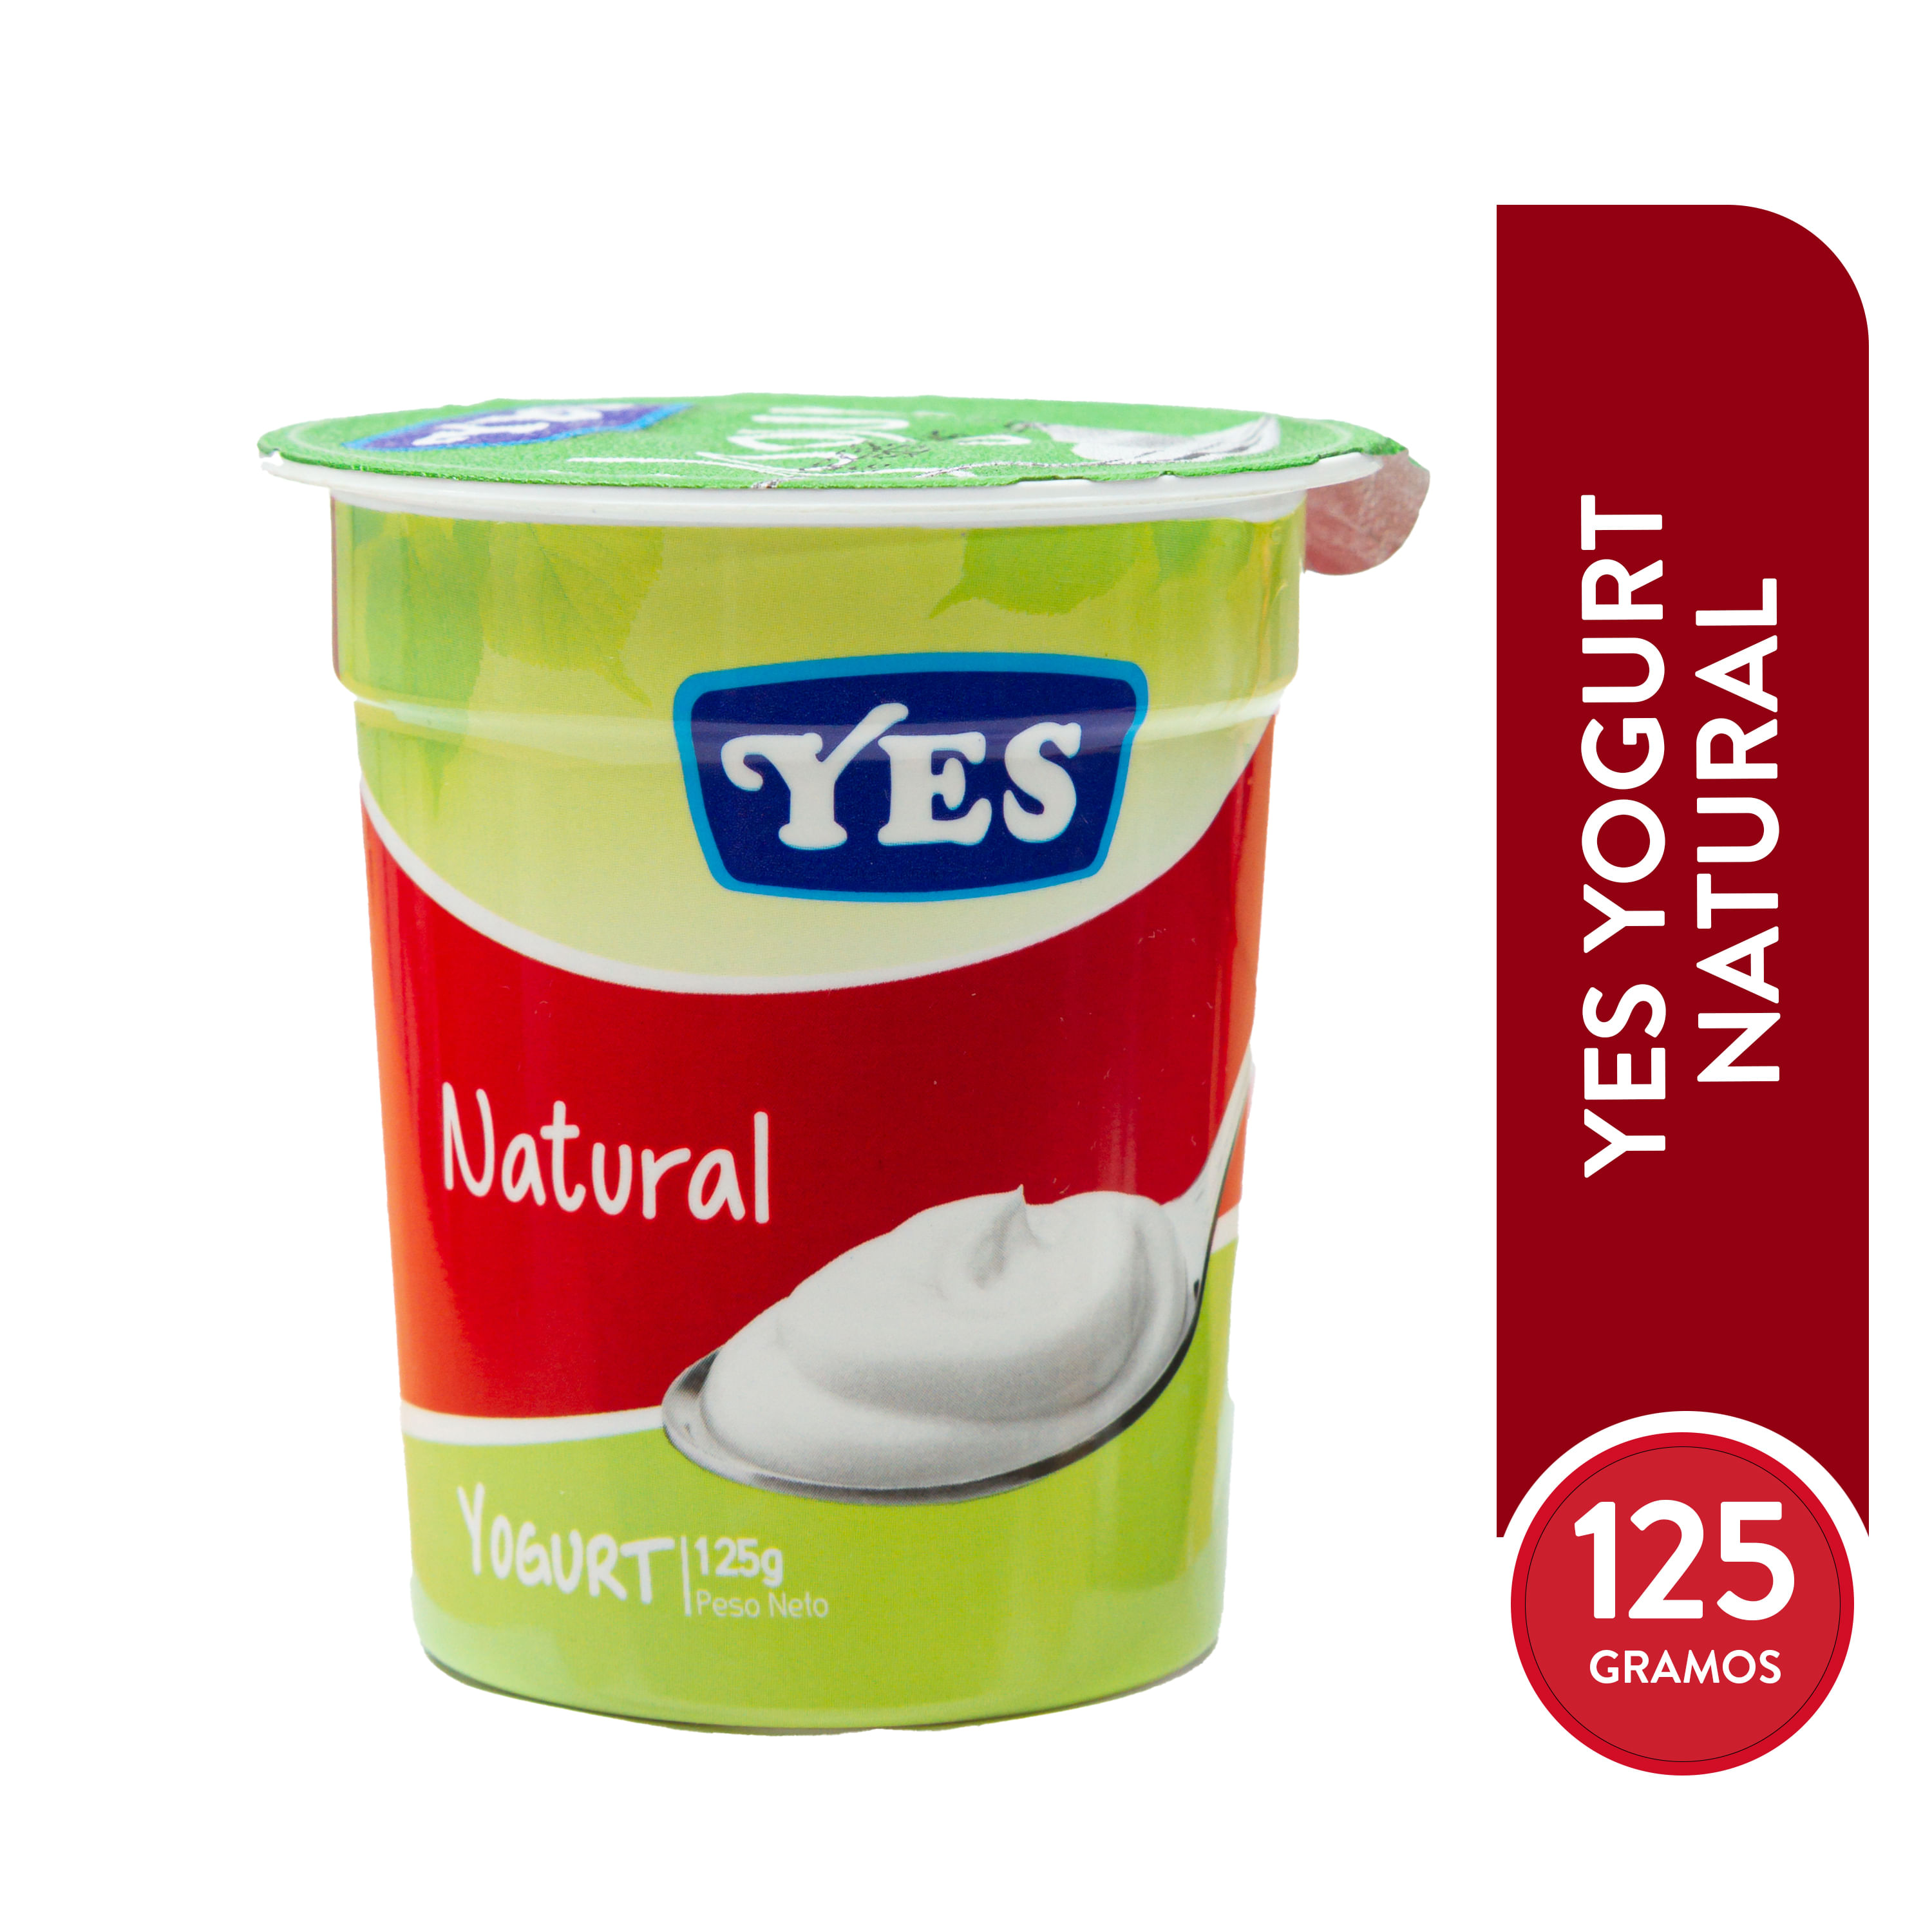 Yogurt YES Cremoso Natural 1 kg